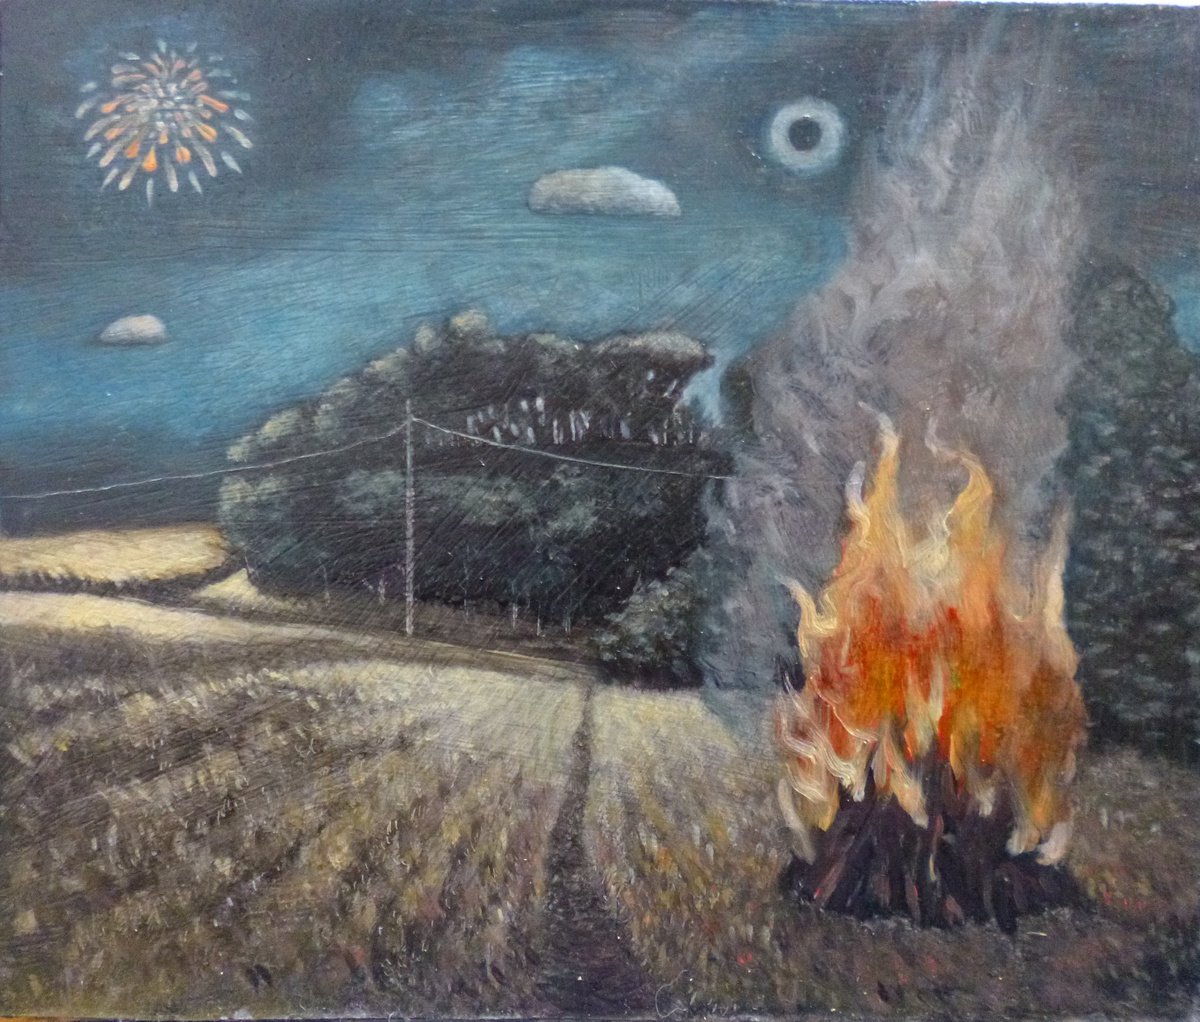 Bonfire in a Field by Donna McGlynn